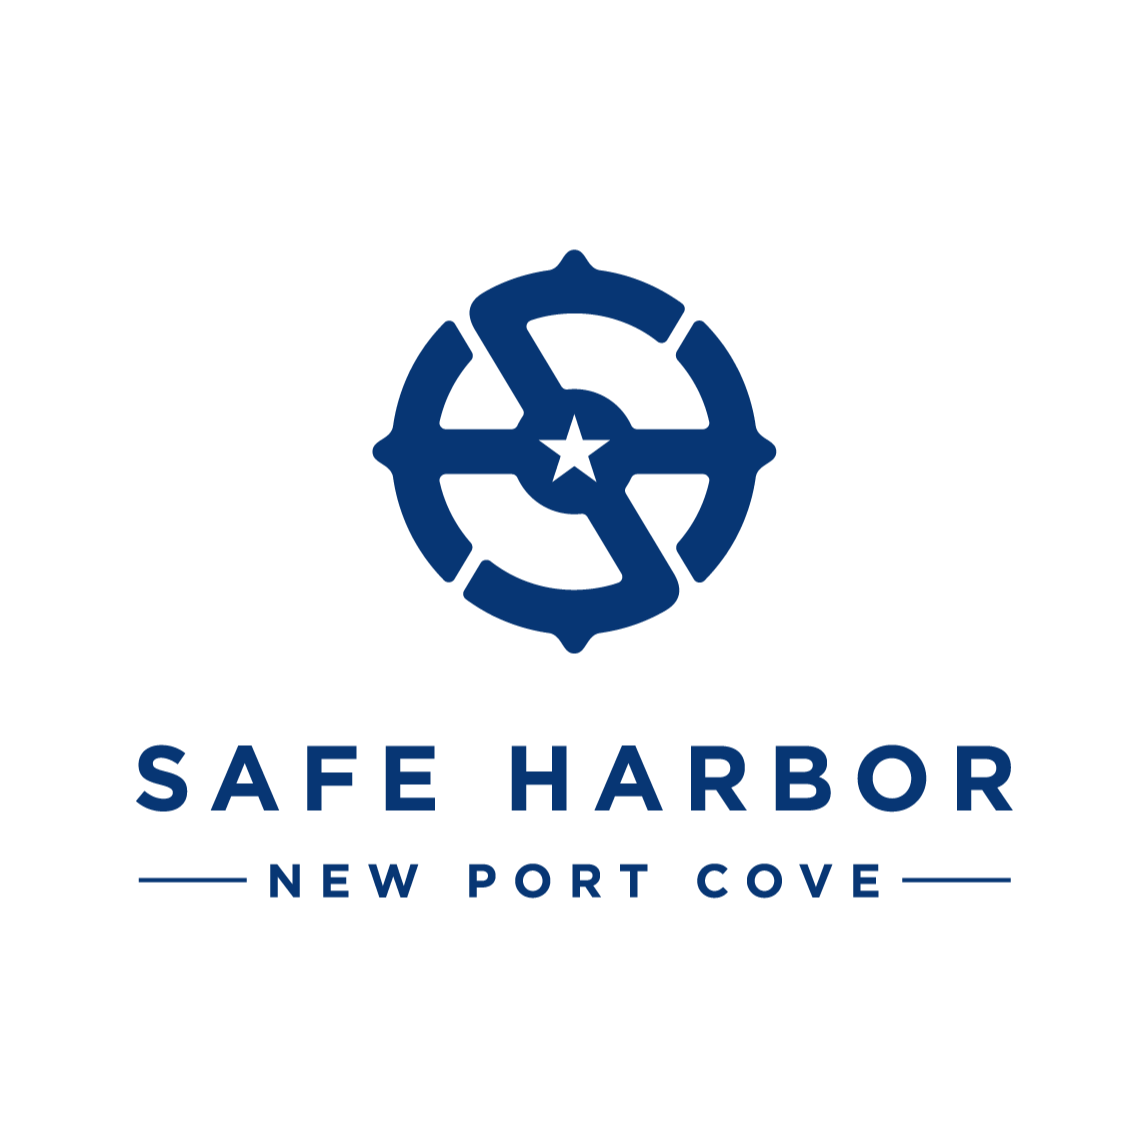 Safe Harbor New Port Cove